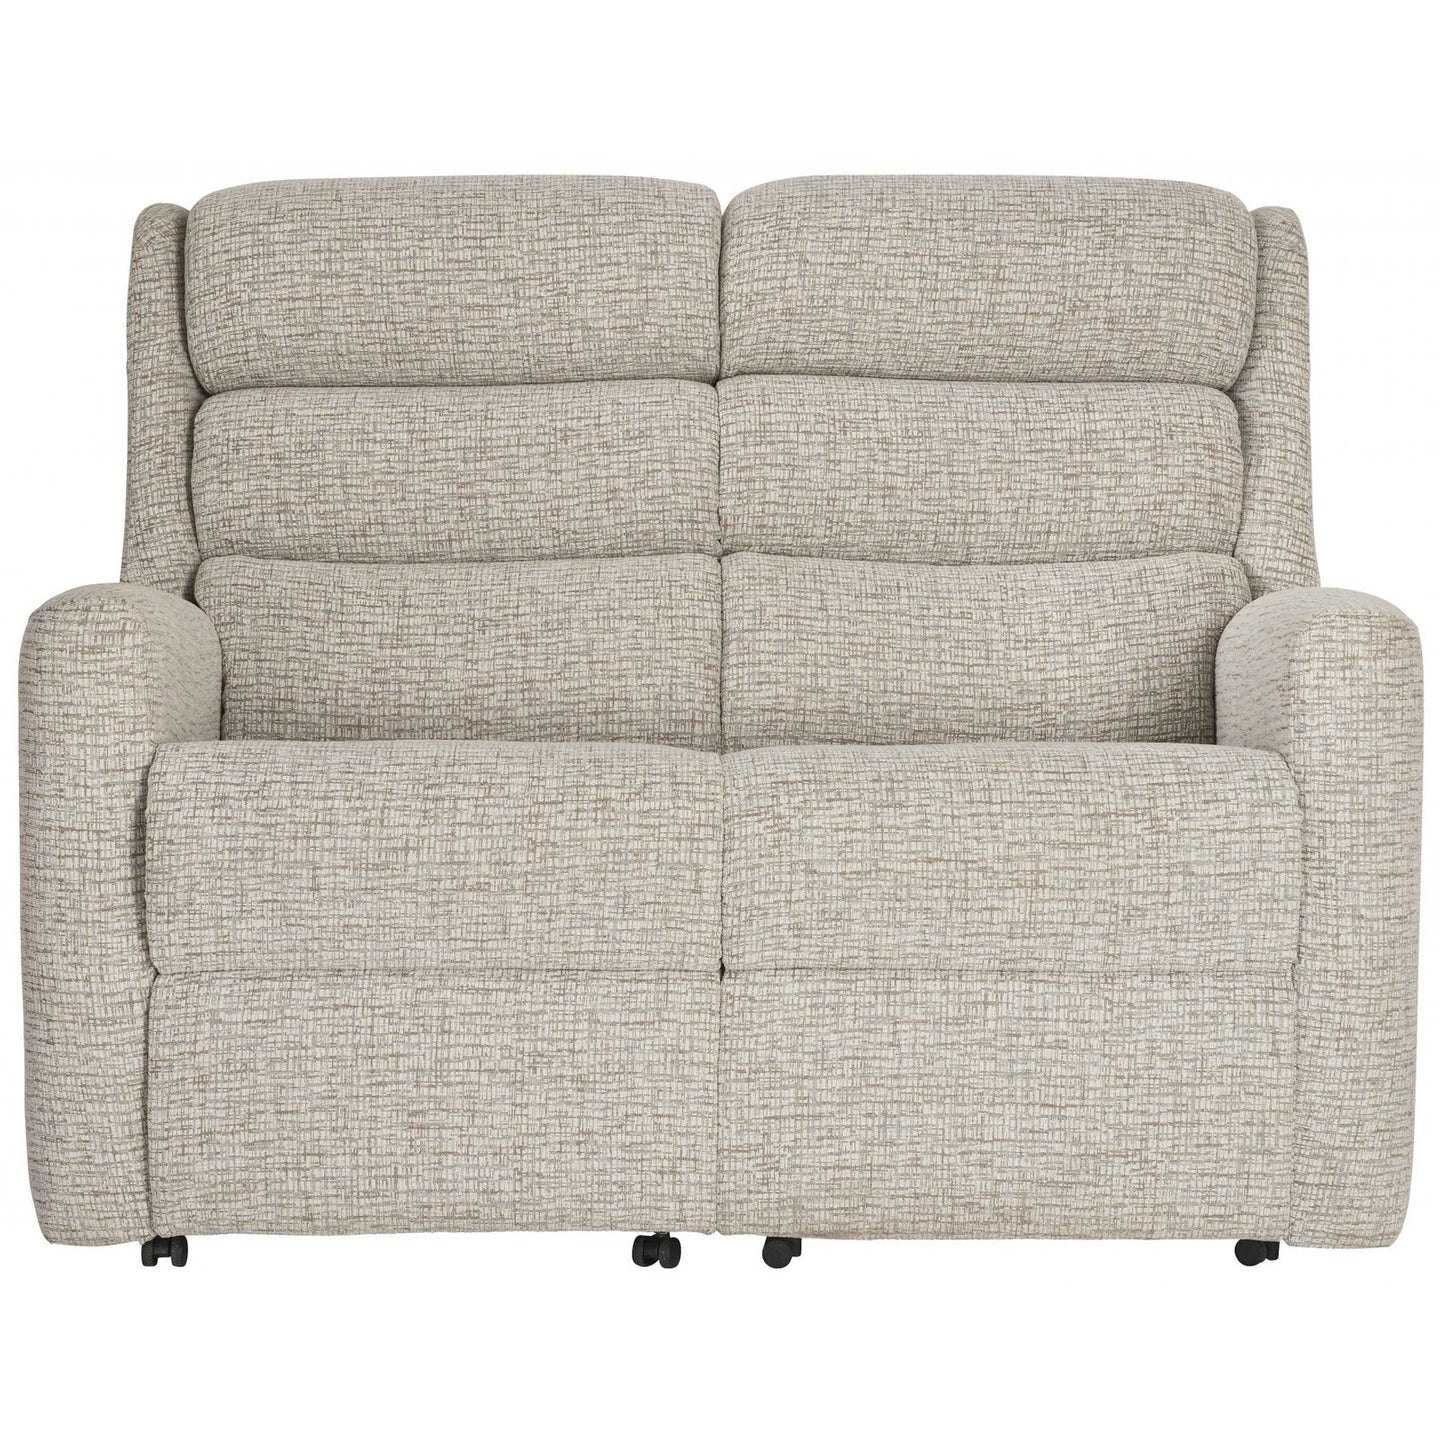 Celebrity Somersby 2 Seater Sofa. - Hunter Furnishing